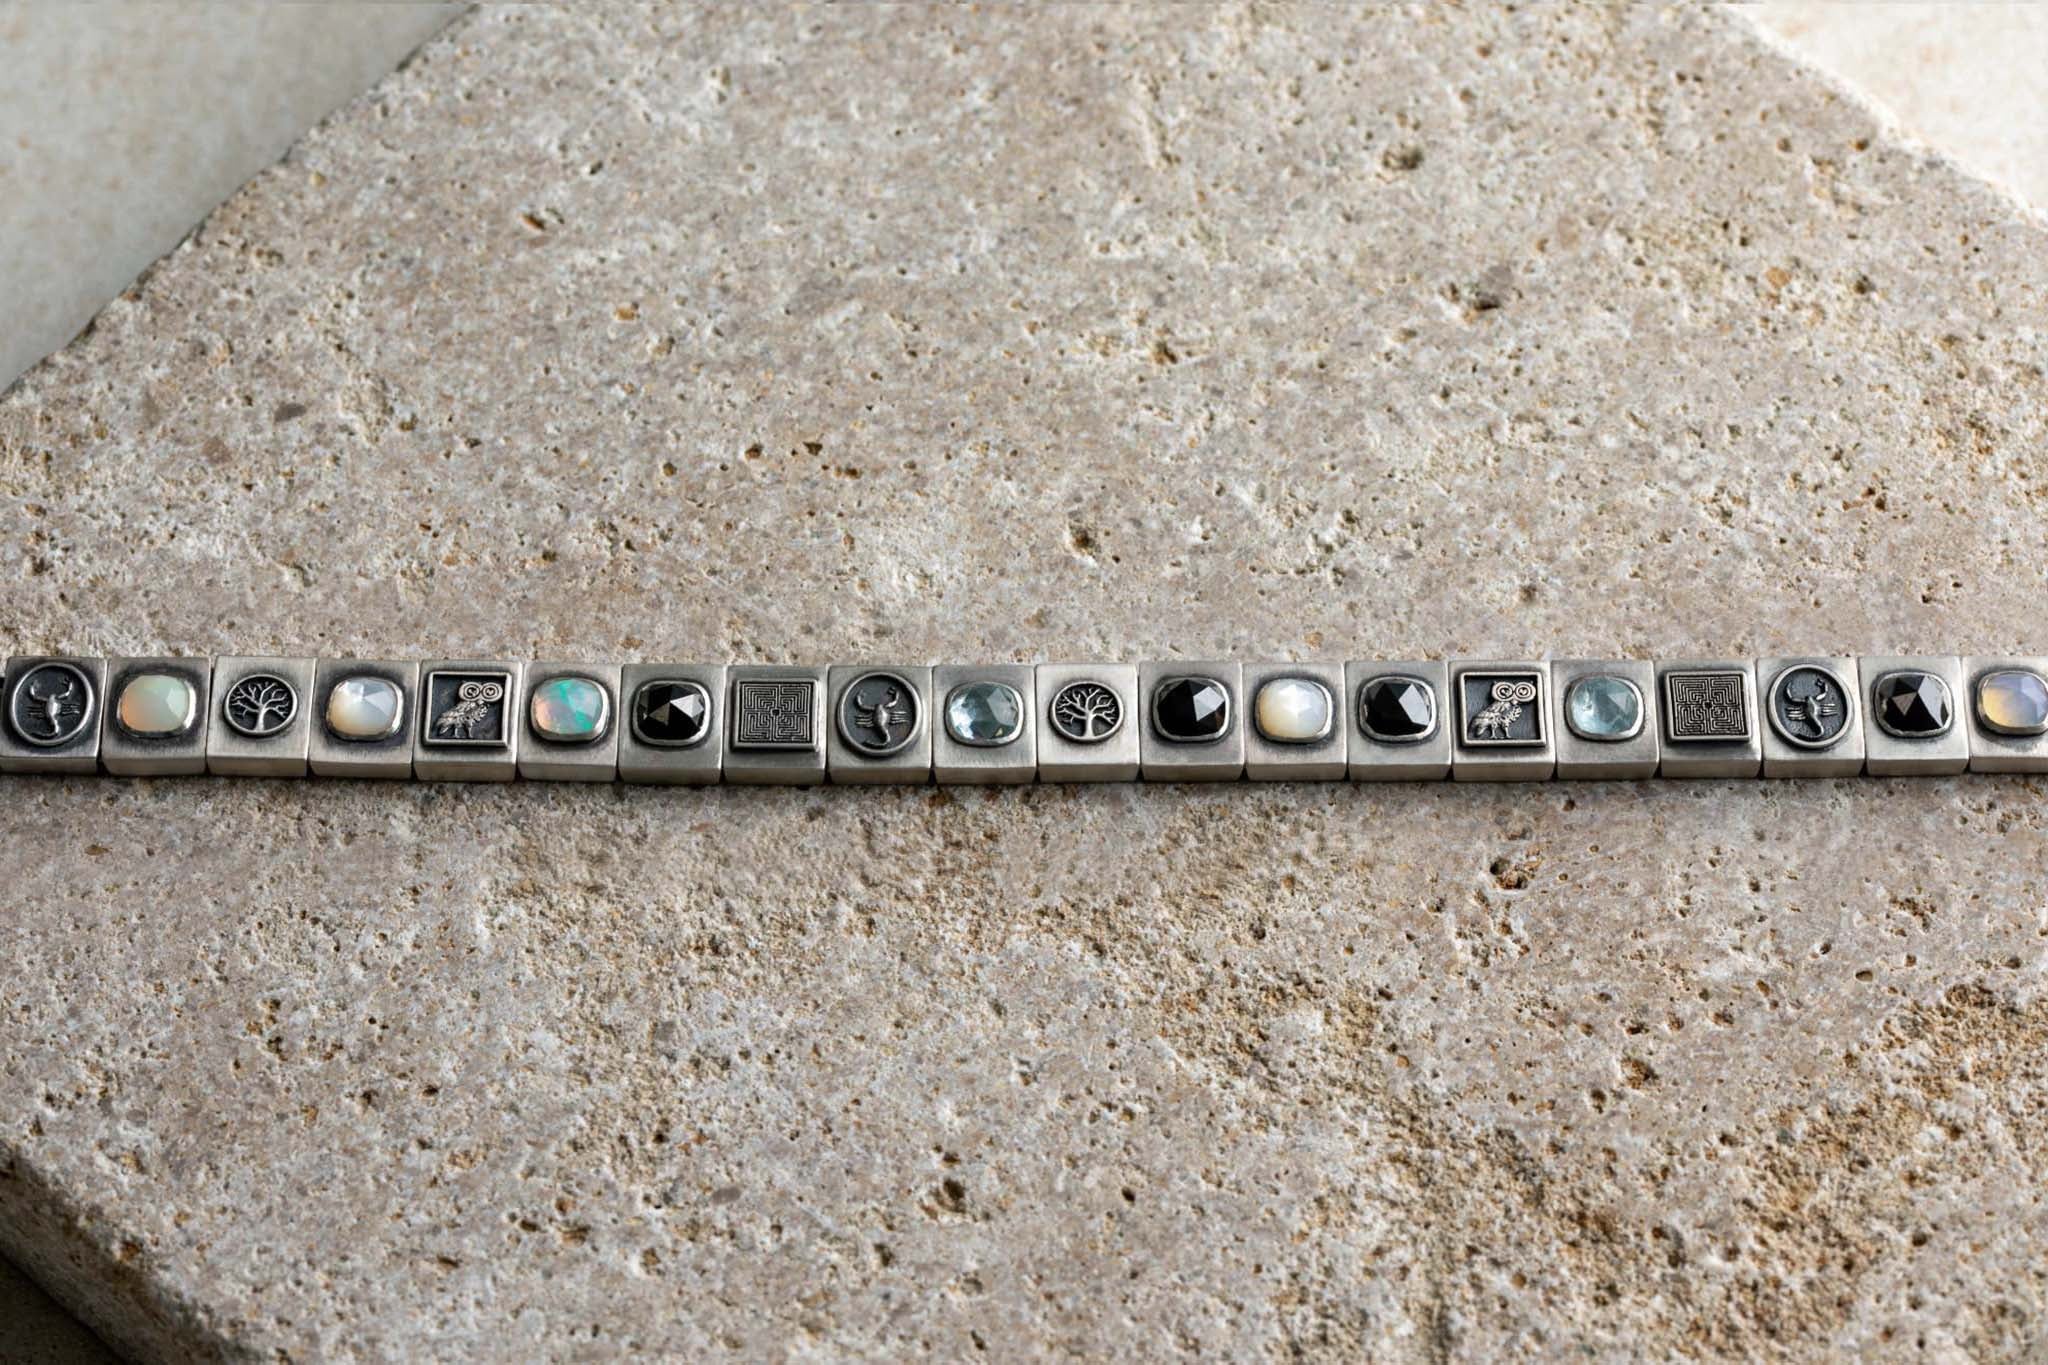 Varnos Black Diamond - Aquamarine - Opal - Mother of Pearl Bracelet (11mm)